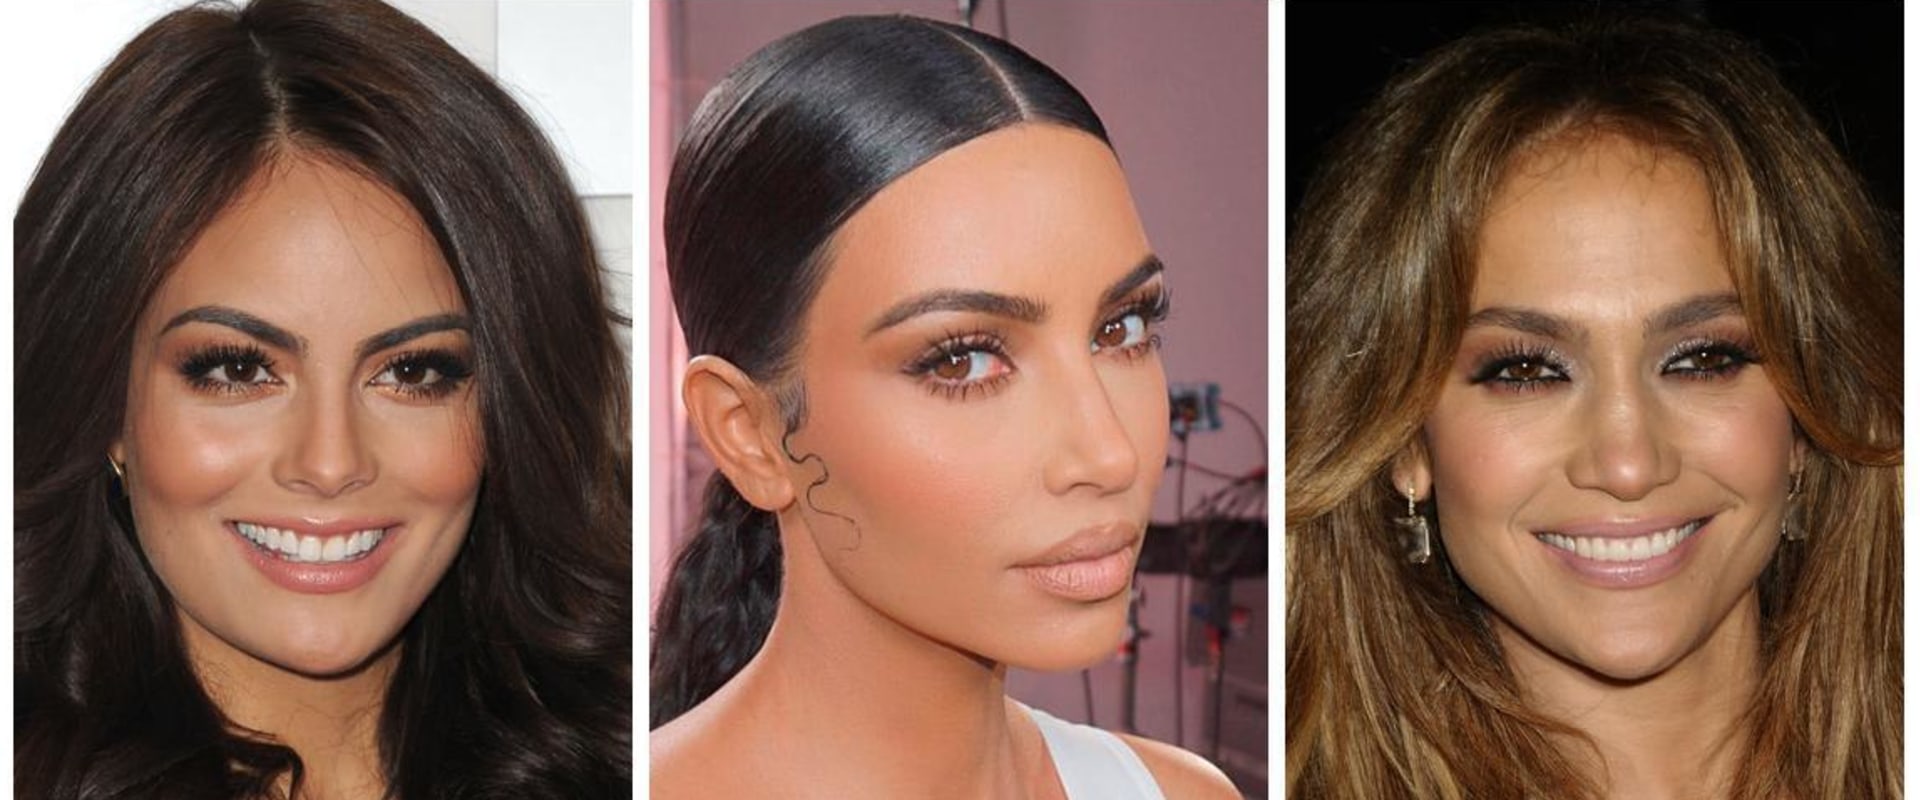 Does kim kardashian wear eyelash extensions?